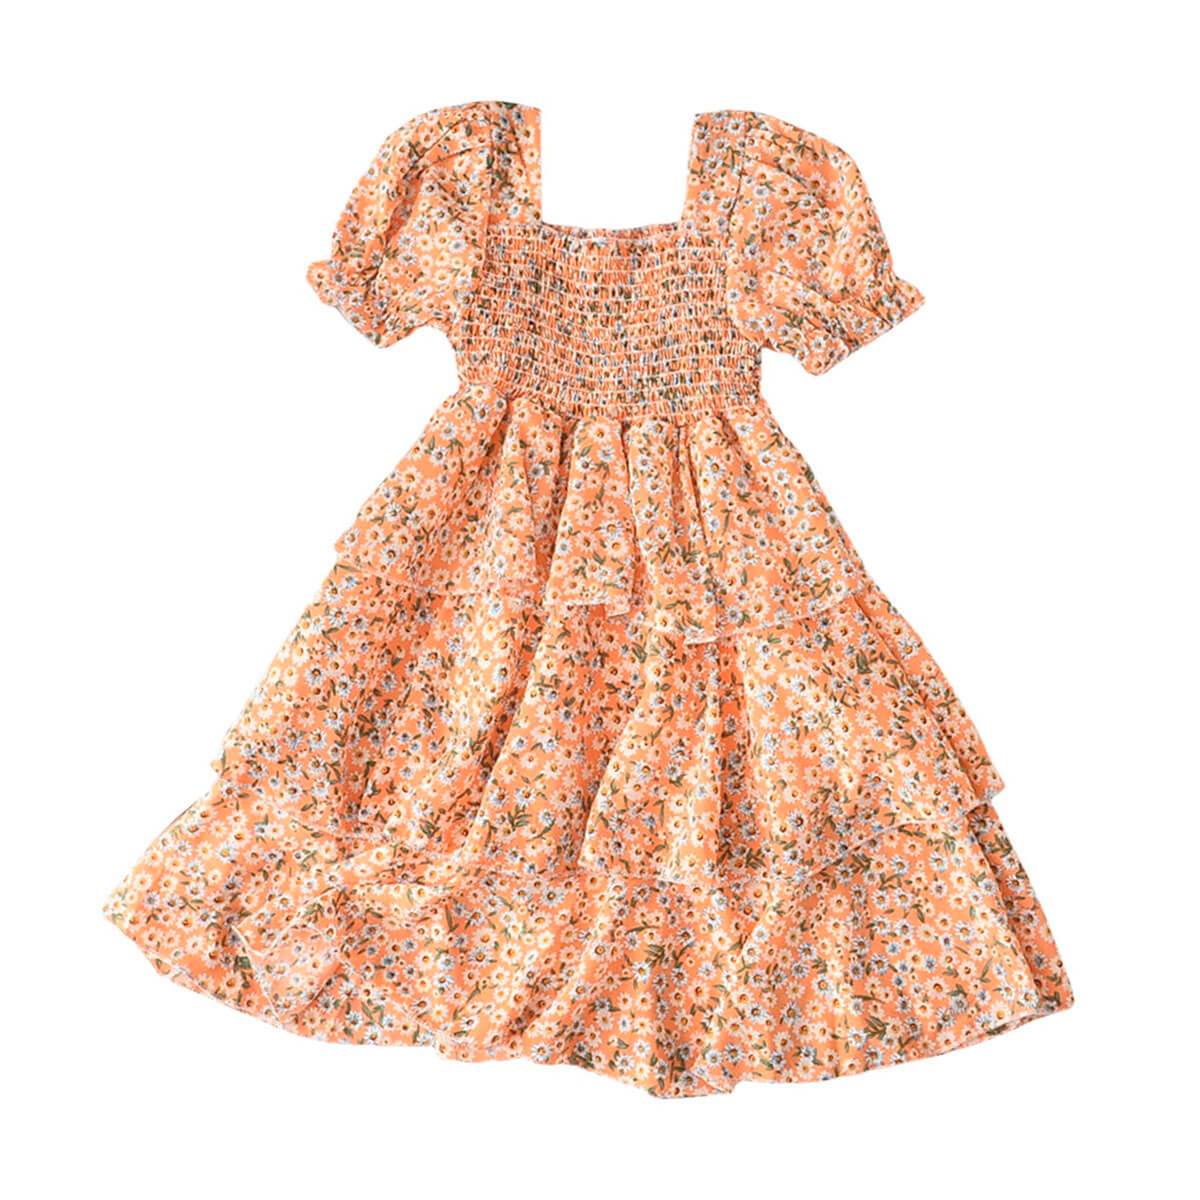 Floral Chiffon Toddler Dress   